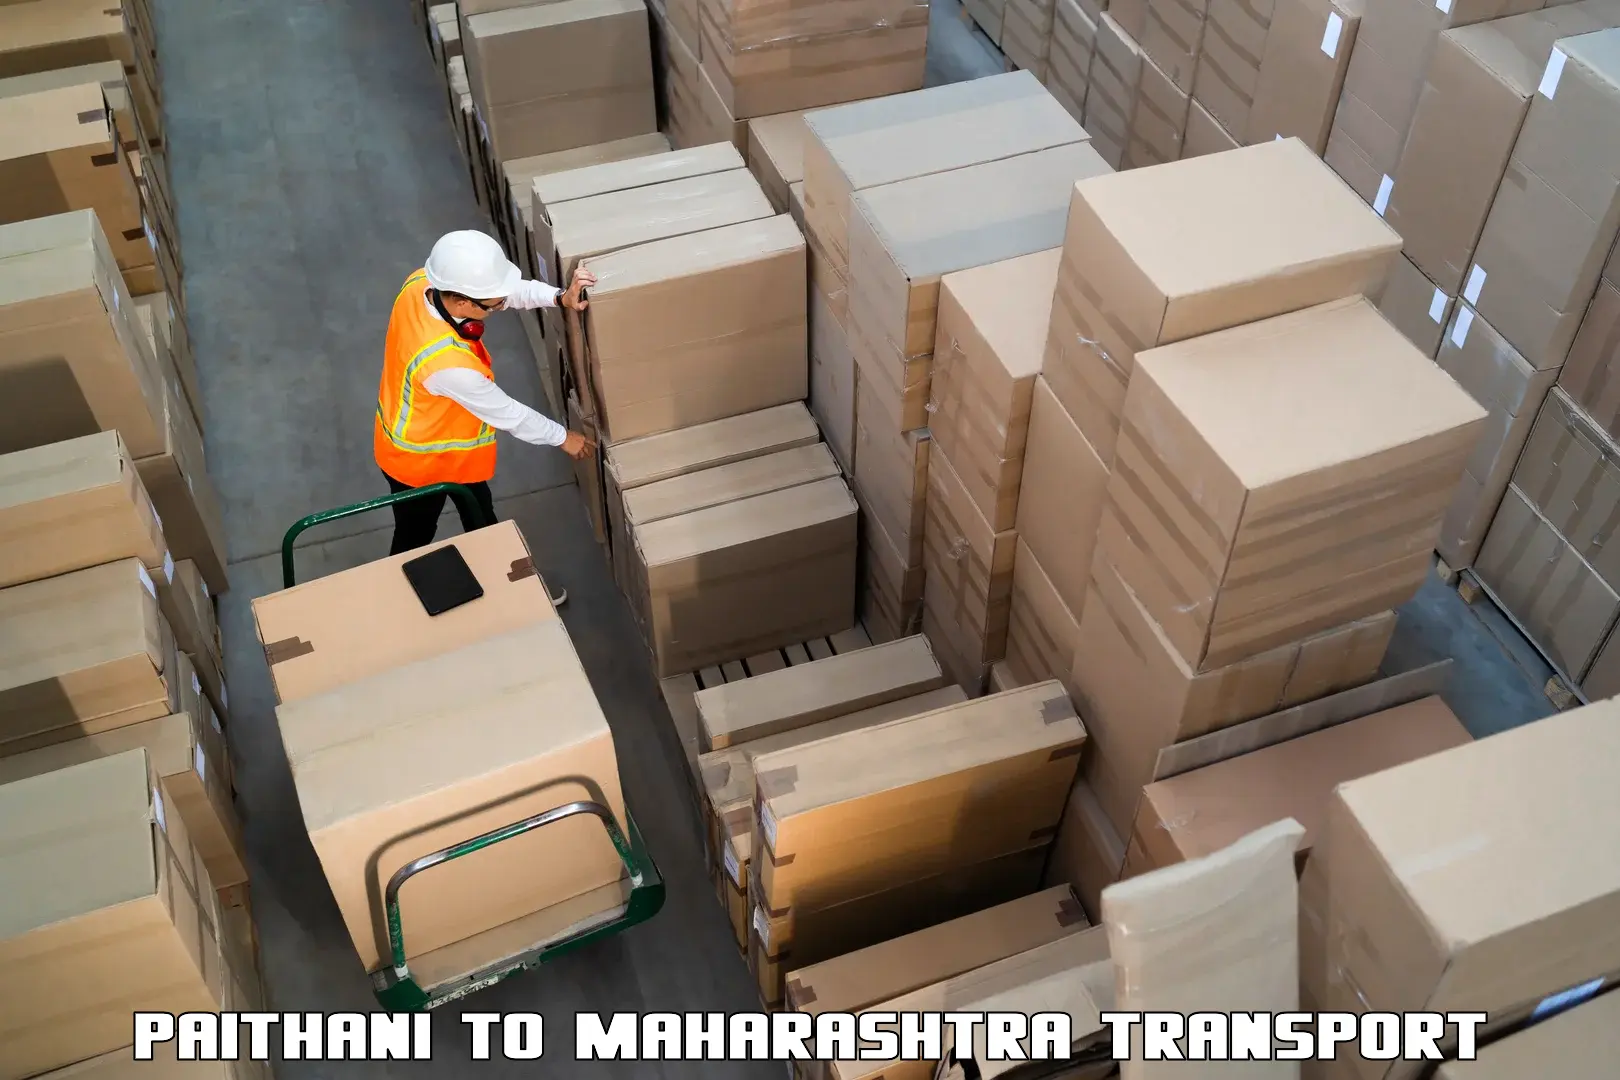 Bike shipping service Paithani to Maharashtra